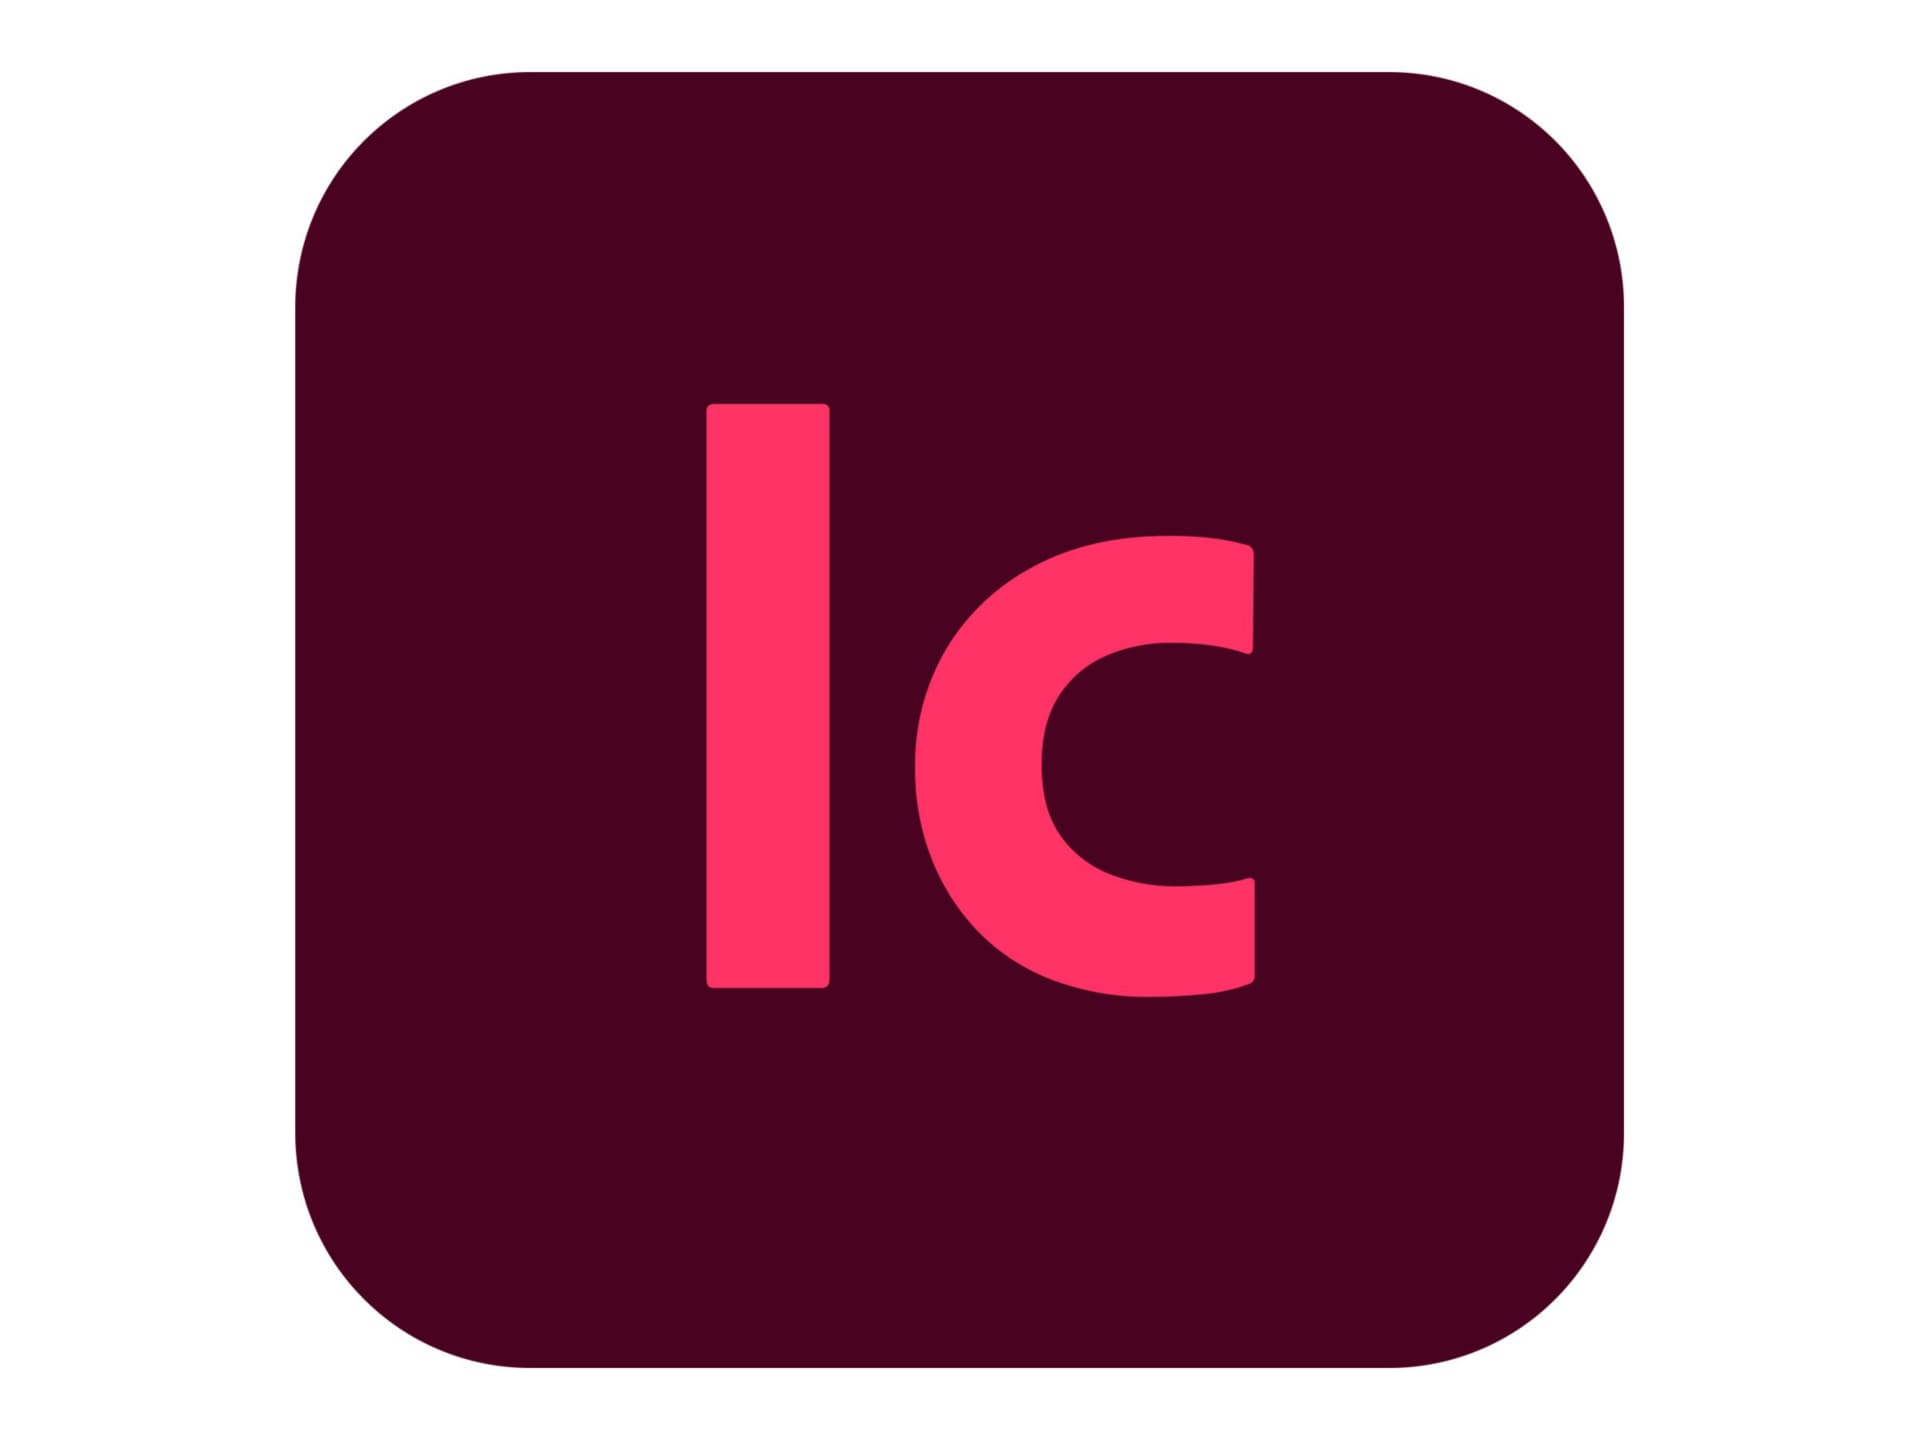 Adobe InCopy CC for Enterprise - Subscription New (11 months) - 1 named user